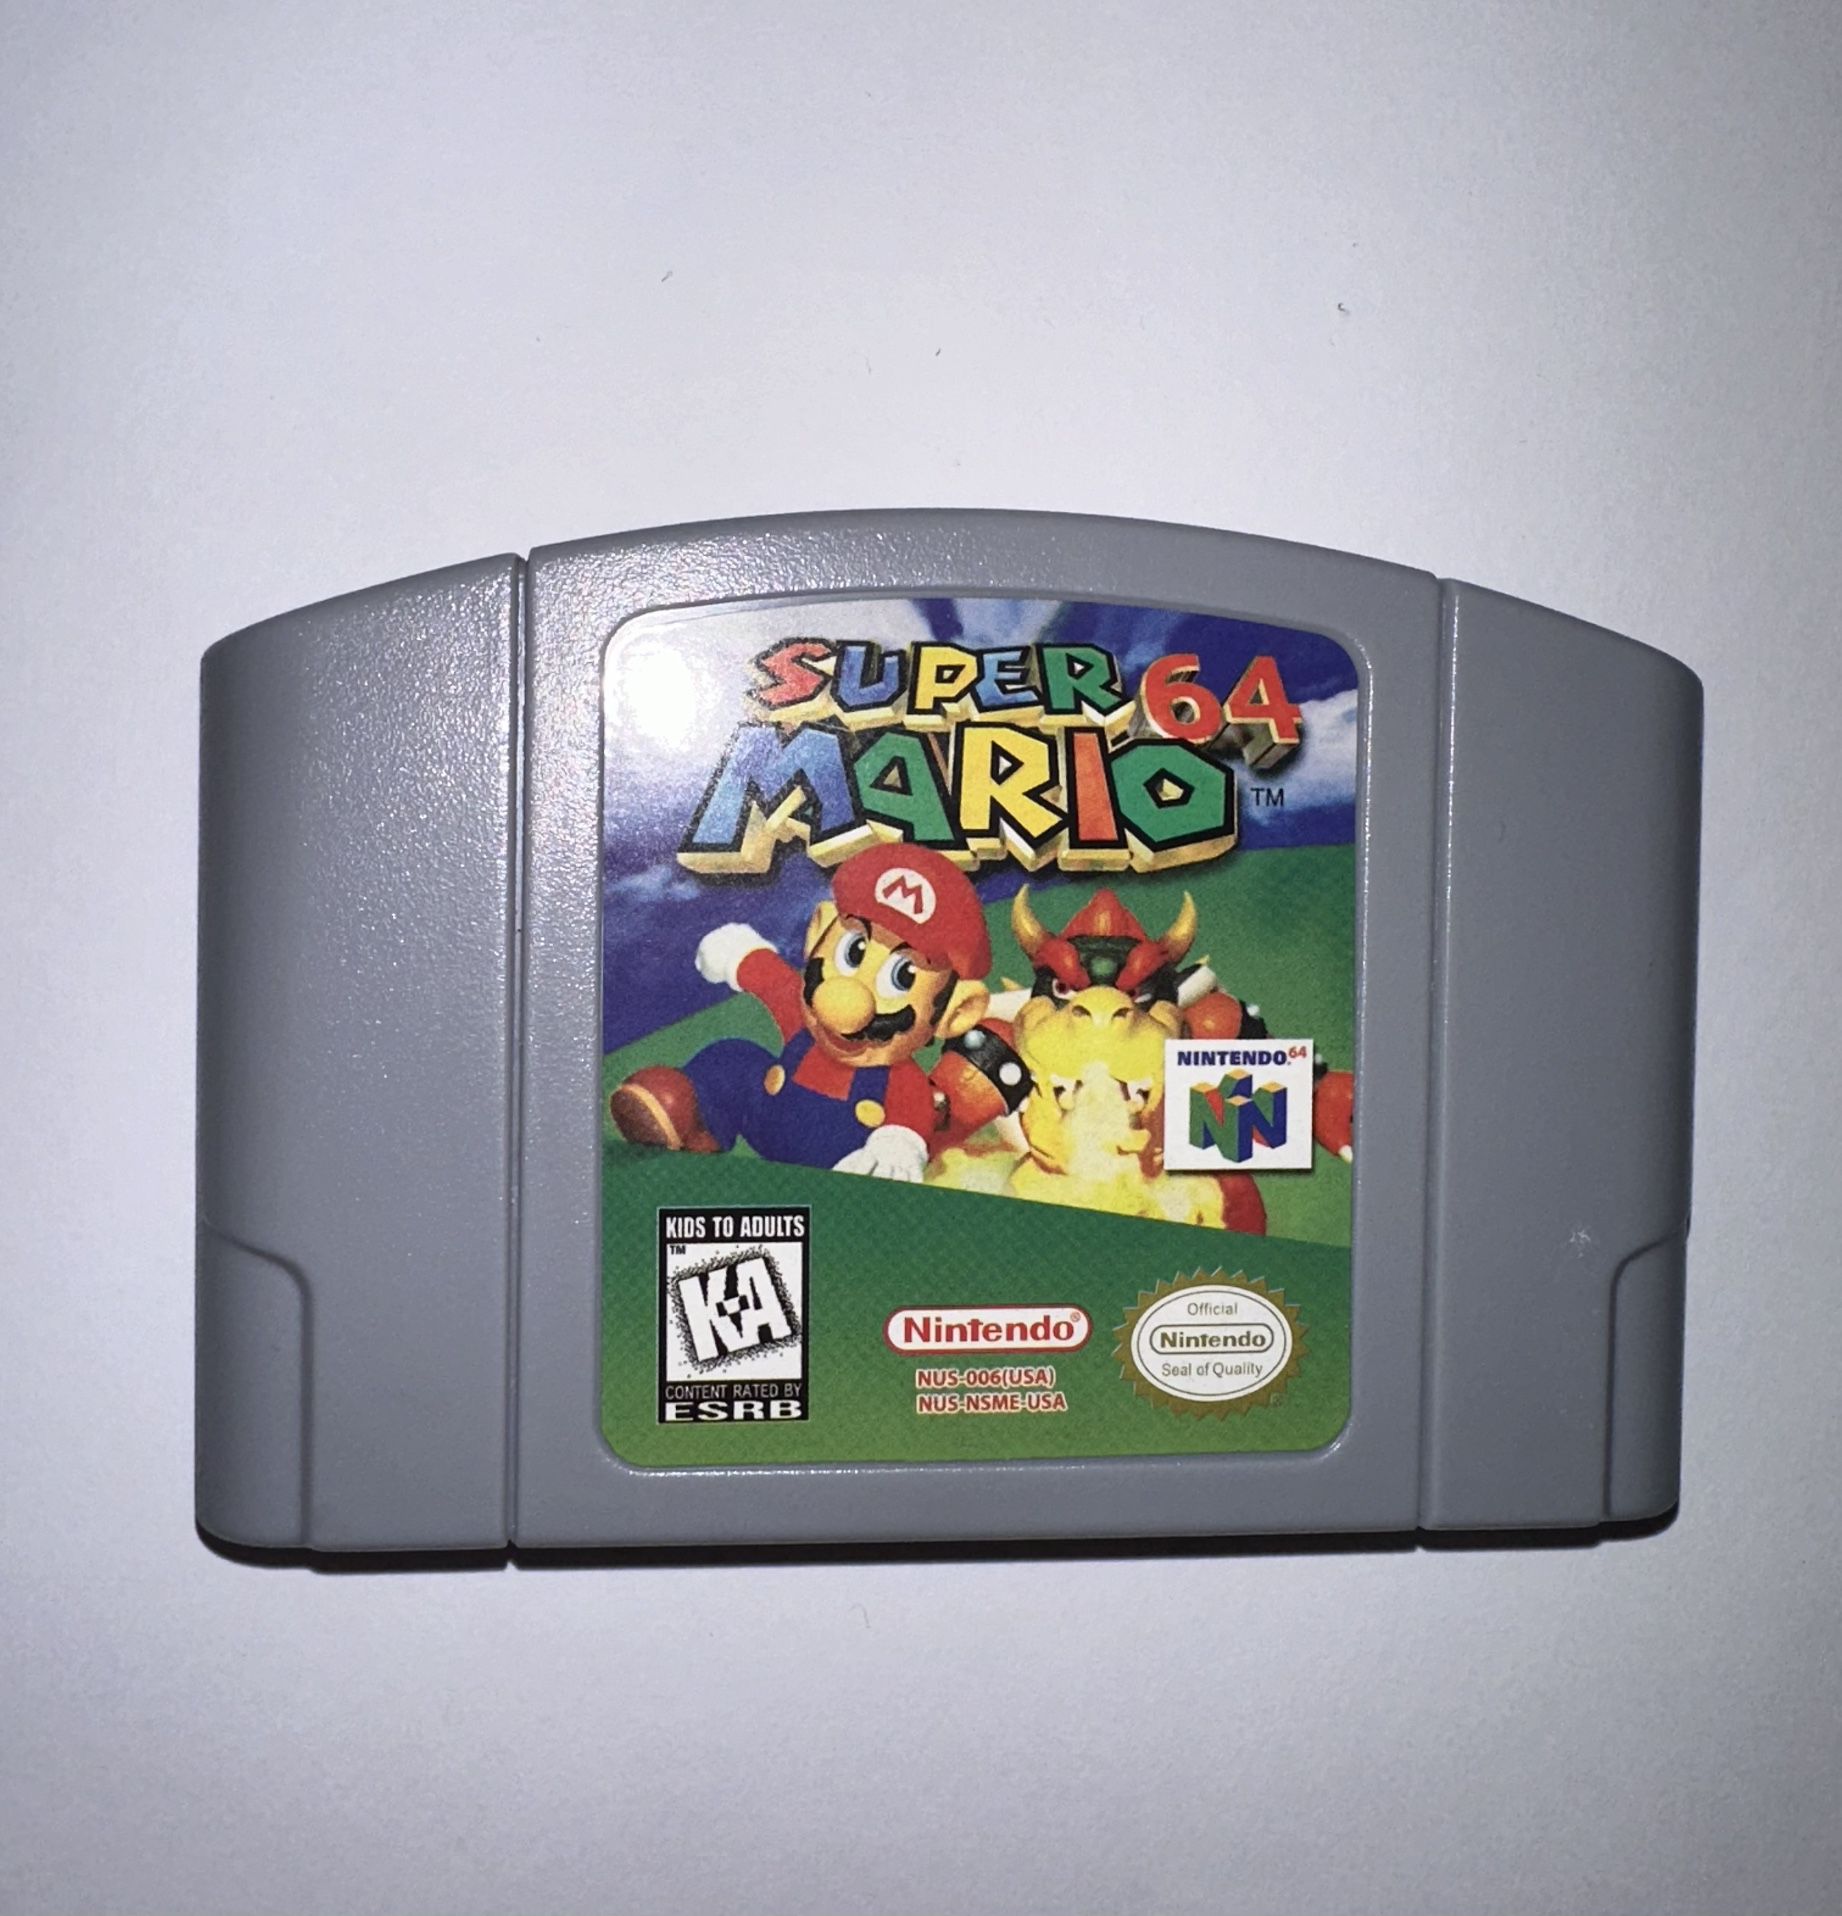 Super Mario 64 for Nintendo 64 